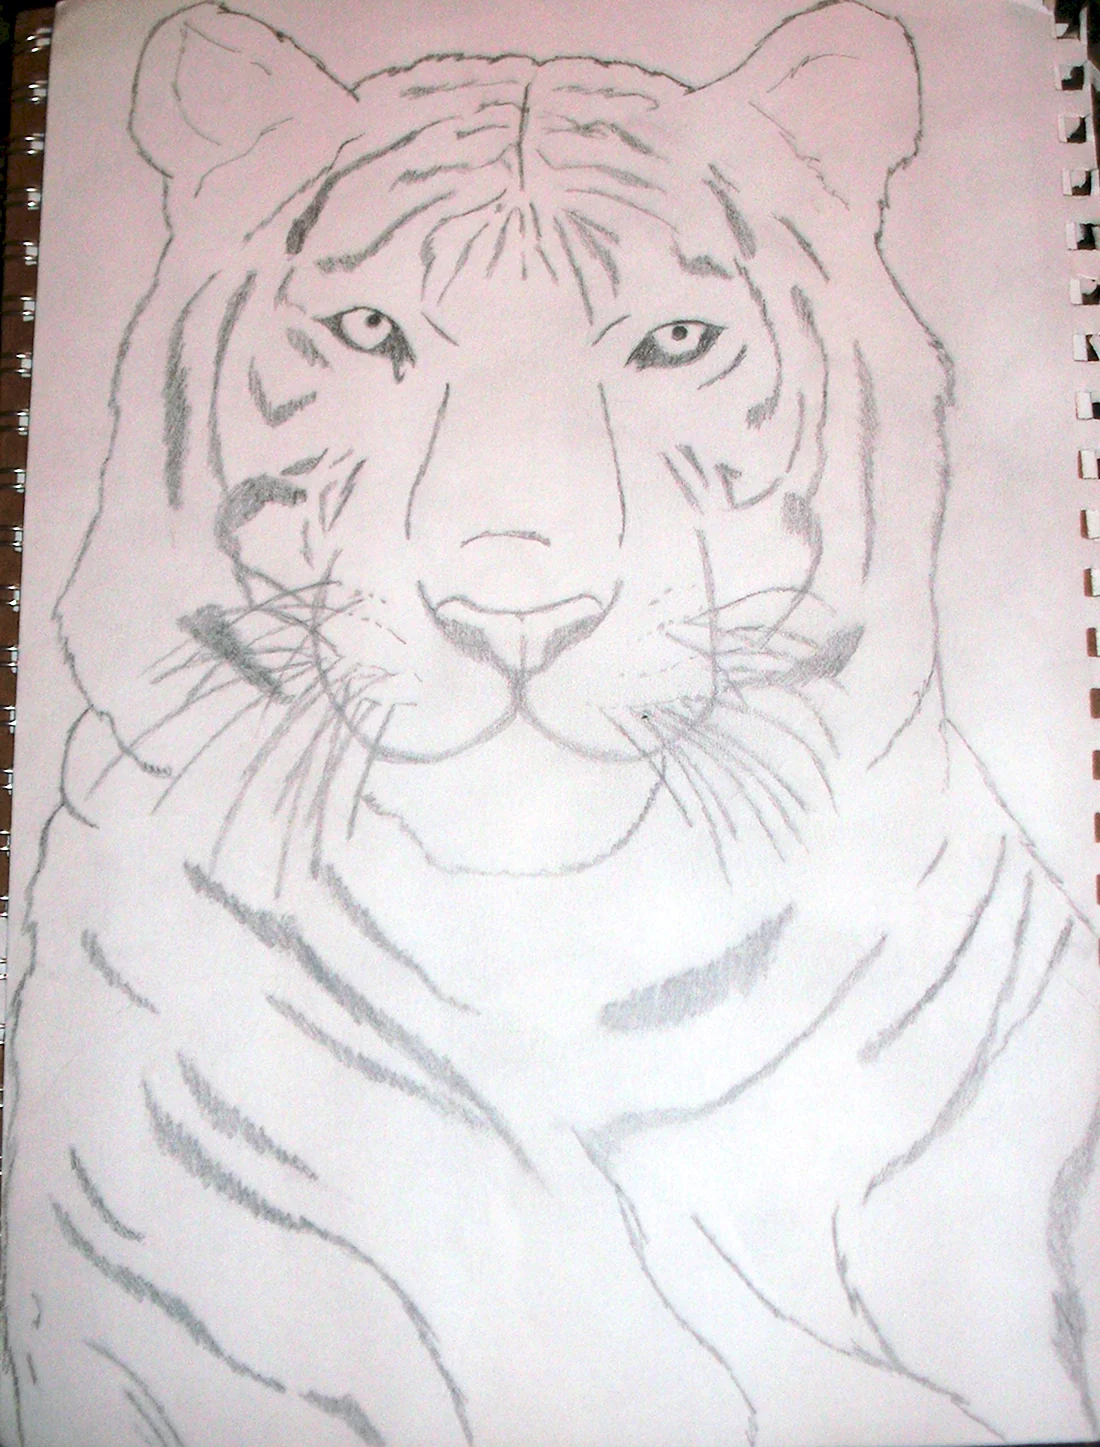 Тигр карандашом для срисовки легко